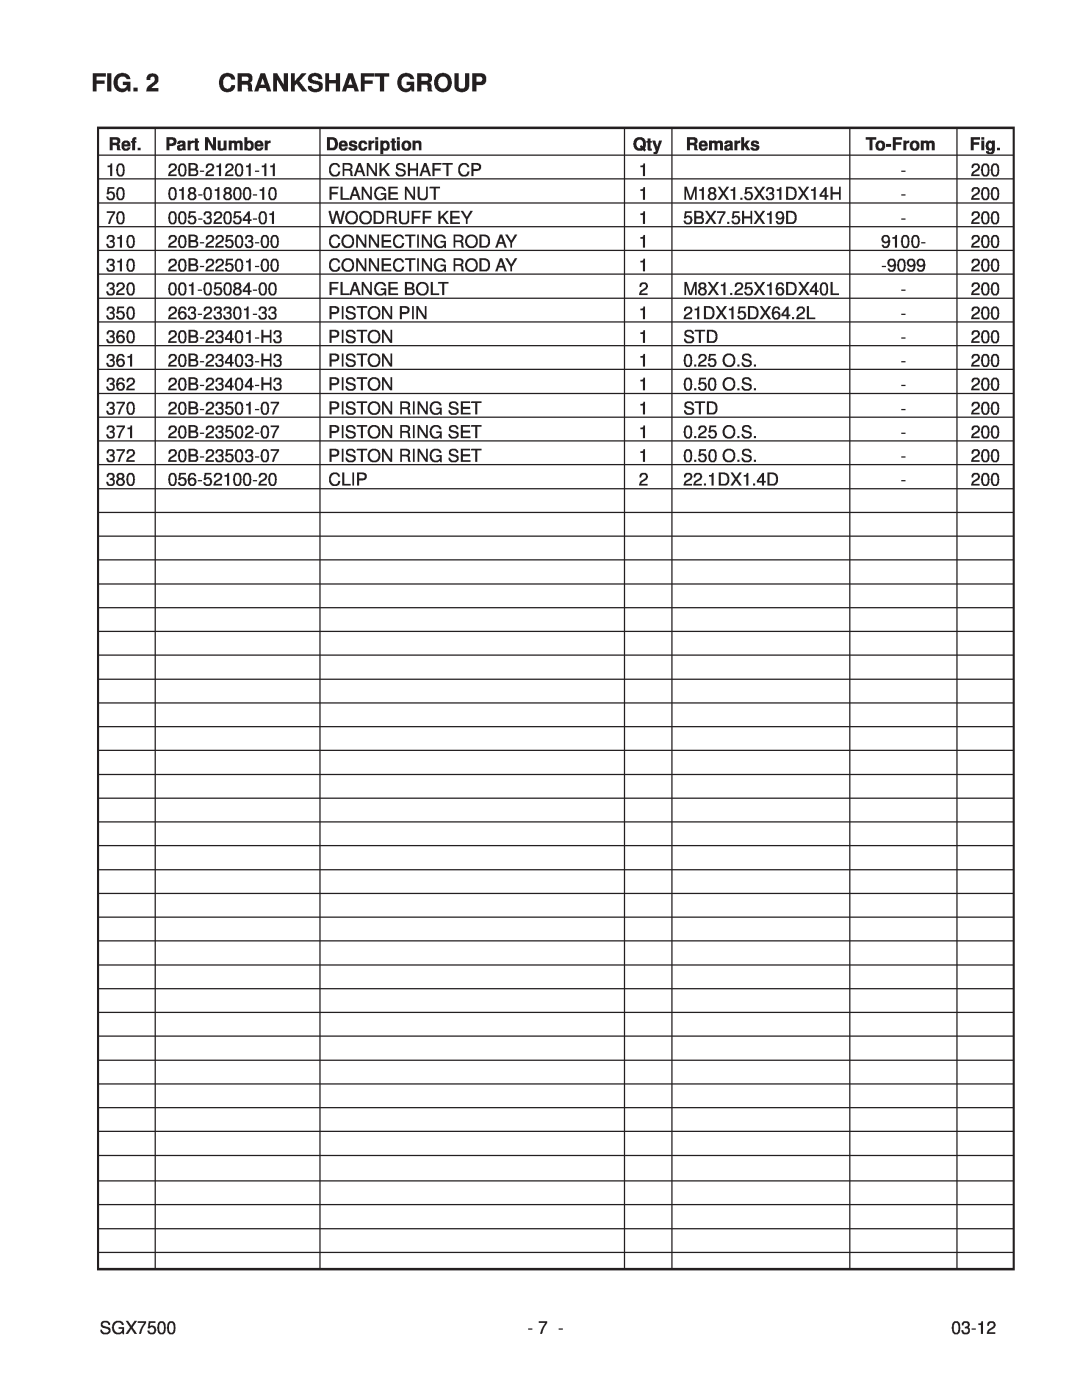 Subaru SGX7500 manual Crankshaft Group, Fig, Part Number, Description, Remarks, To-From 